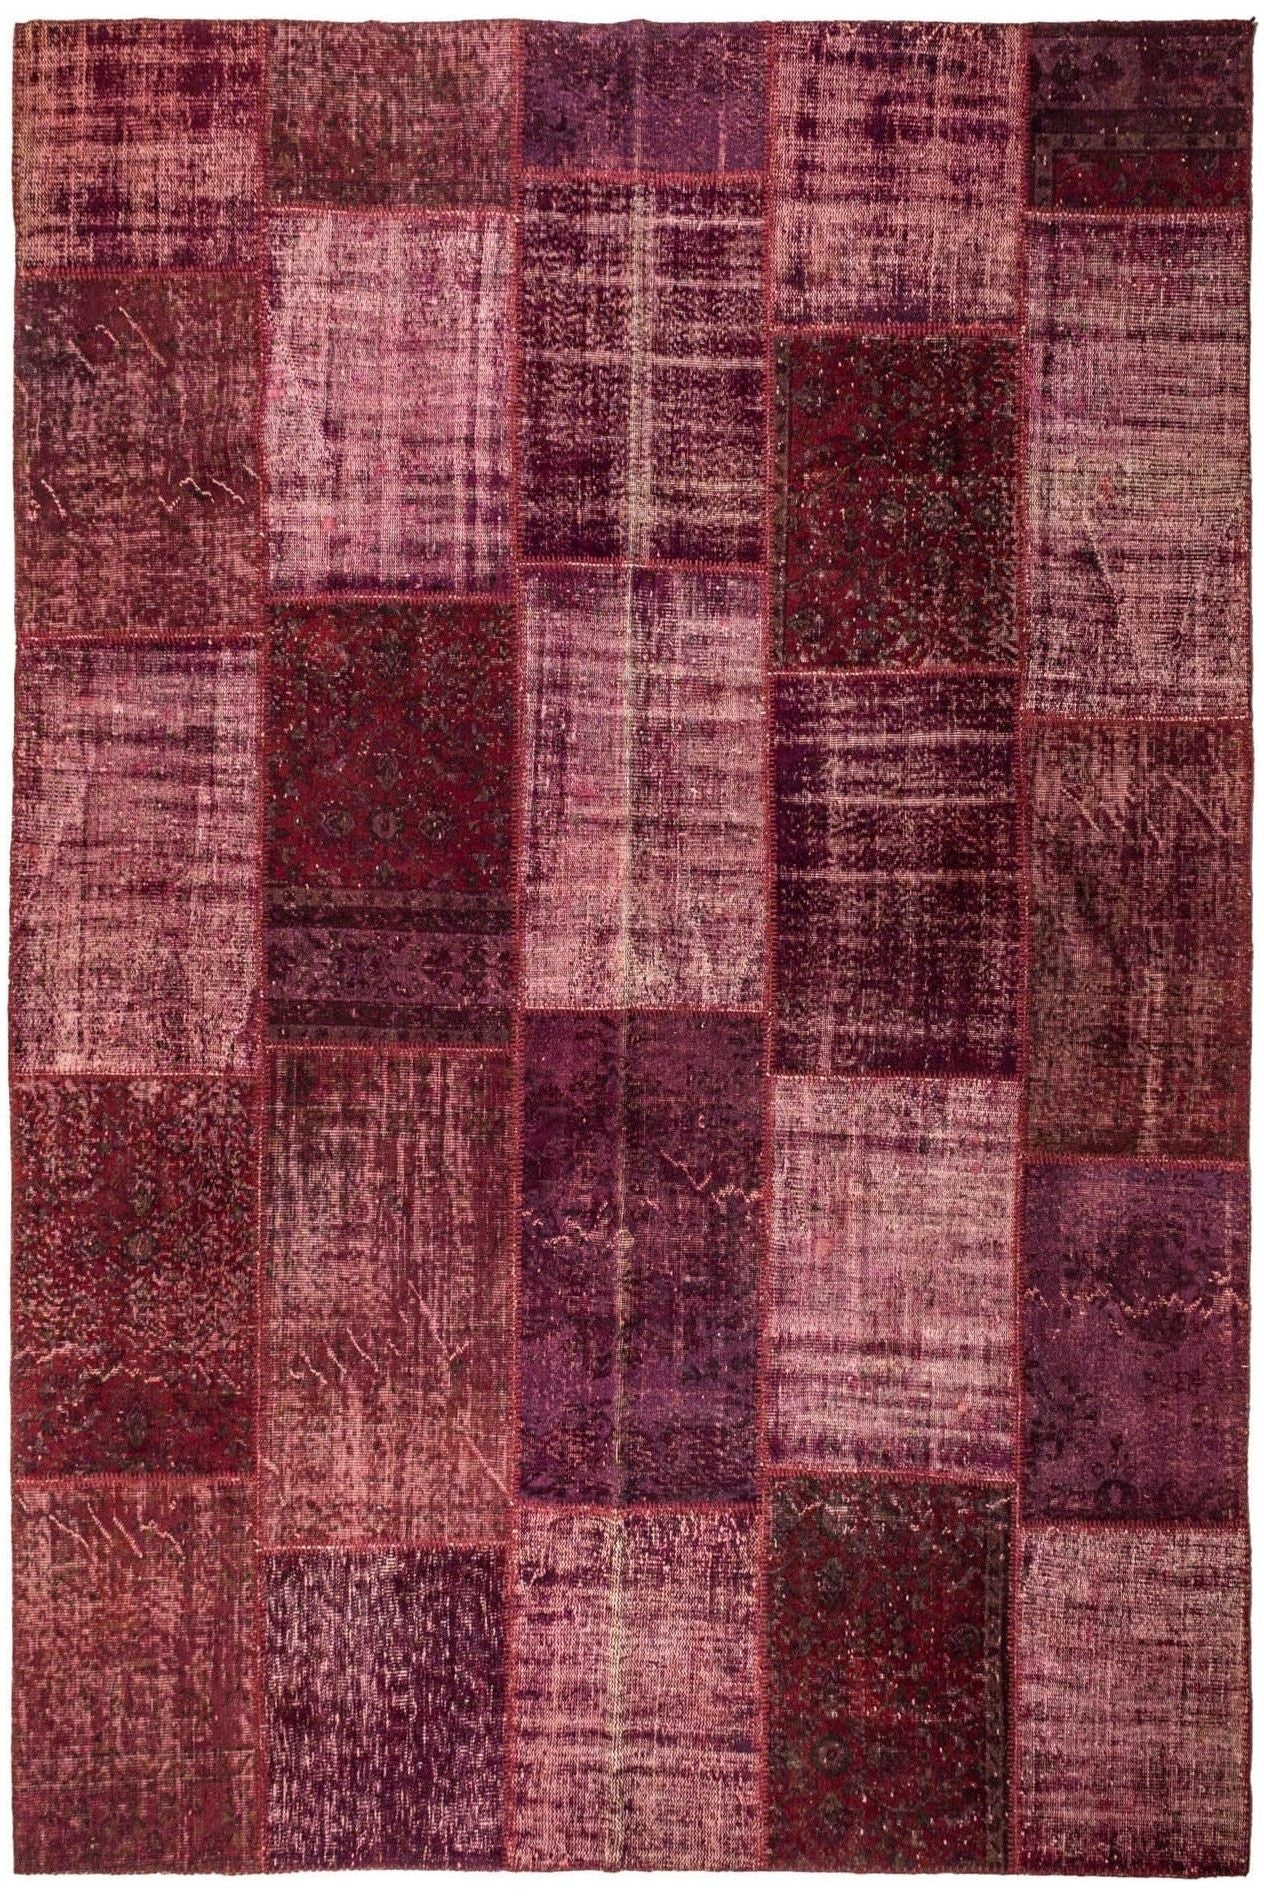 #Turkish_Carpets_Rugs# #Modern_Carpets# #Abrash_Carpets#Abrash-Turpa-071600216-250X350